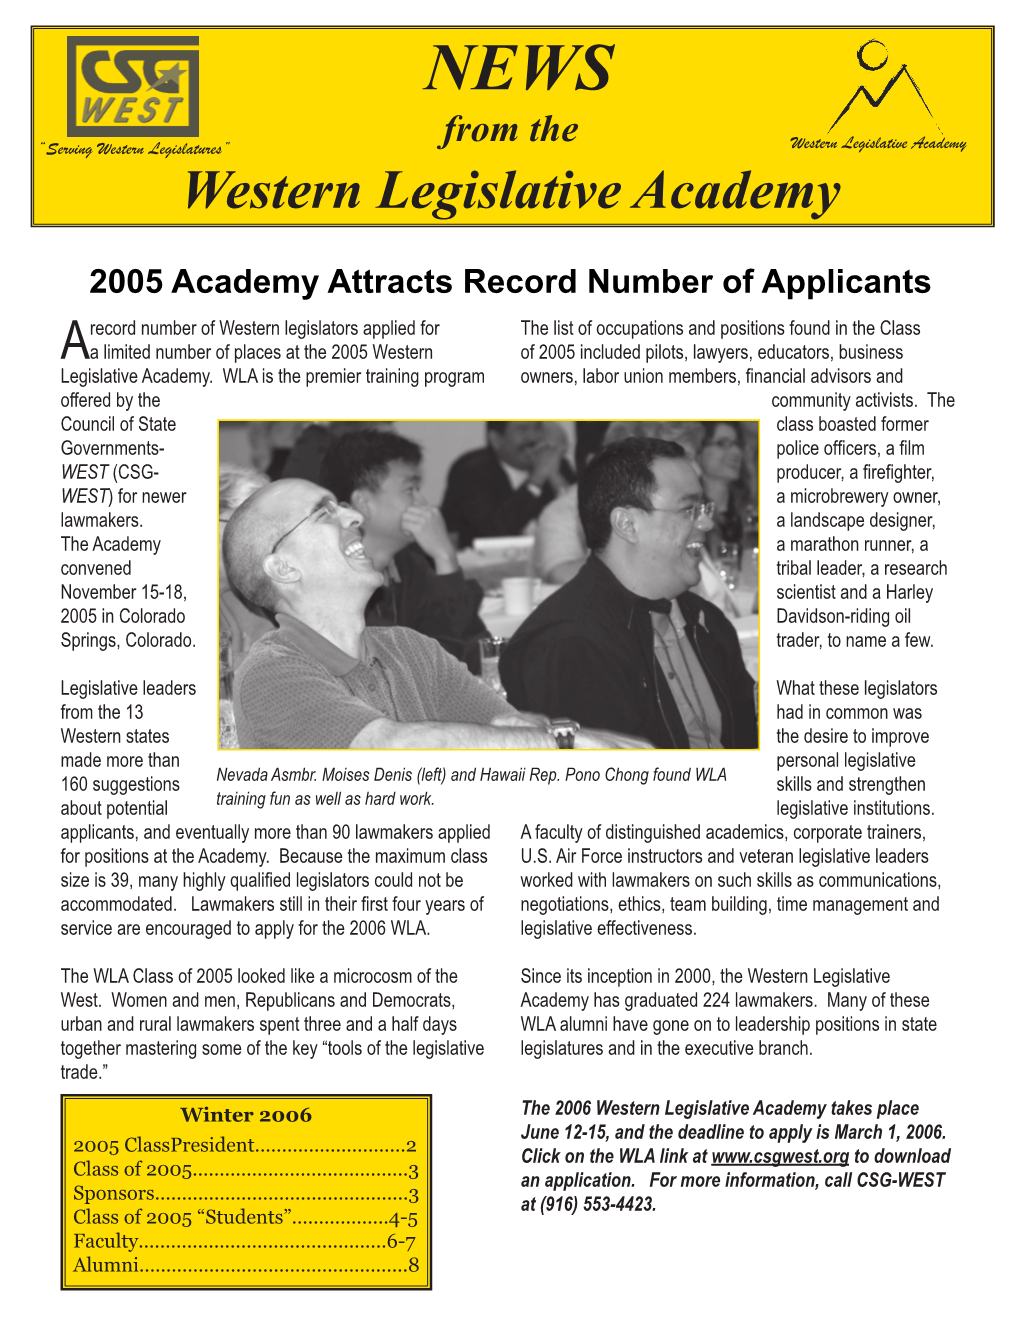 Western Legislative Academy Western Legislative Academy